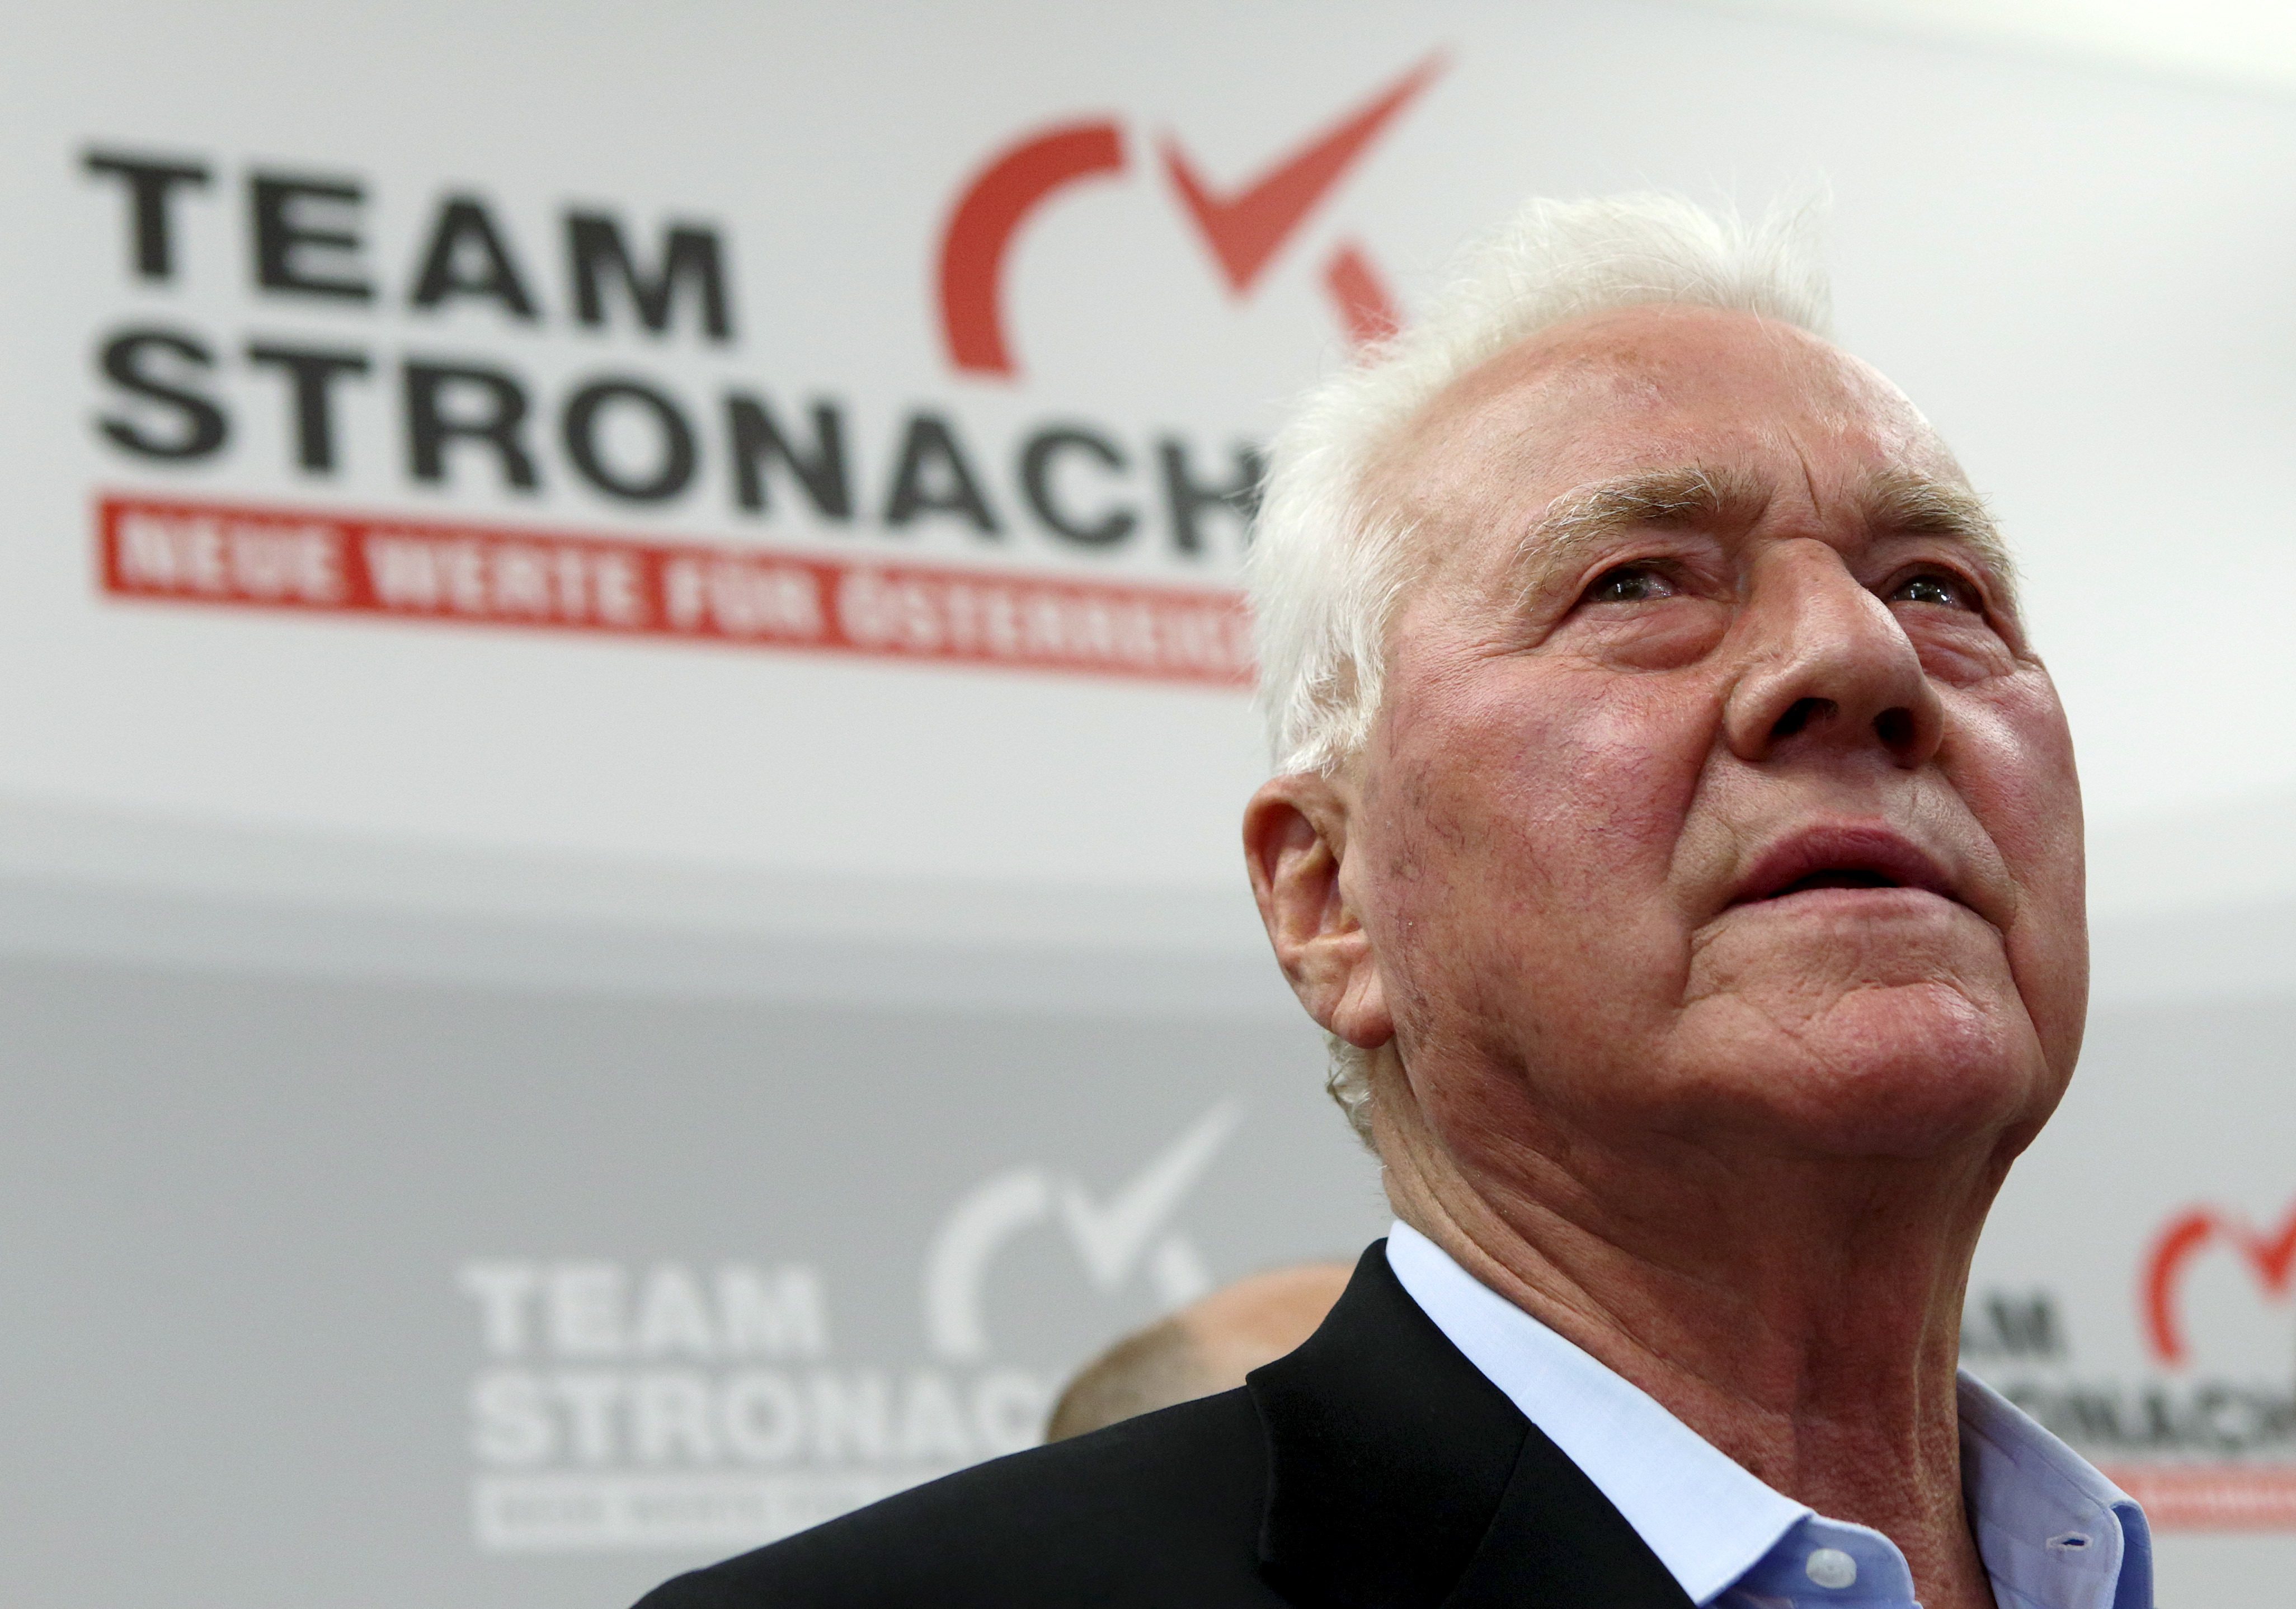 Austrian-Canadian billionare Stronach addresses a news conference in Vienna